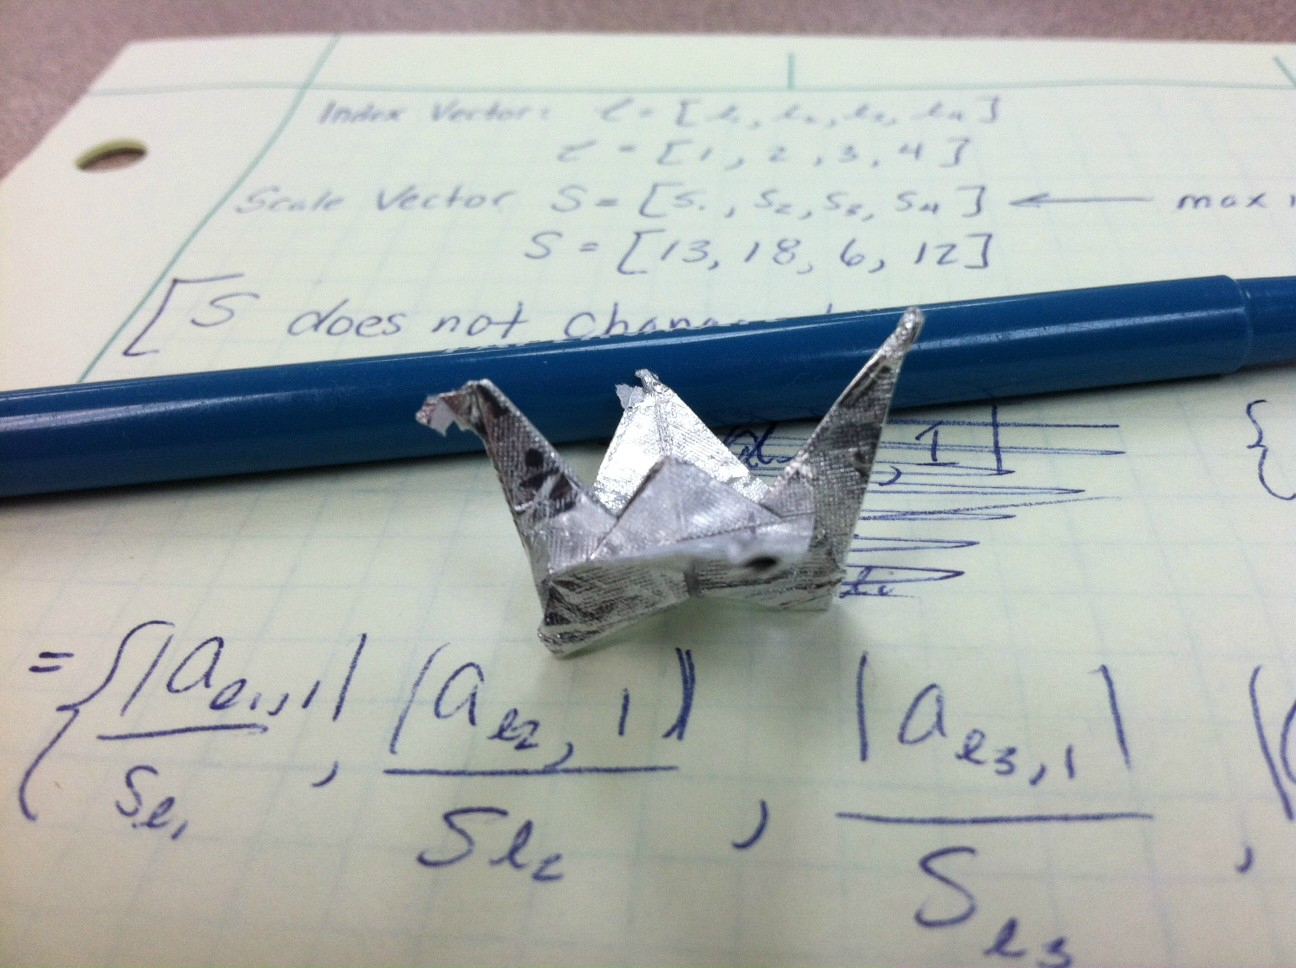 Gum Wrapper Origami Crane Girl Next To Me In Math Class Made A Crane Out Of A Gum Wrapper